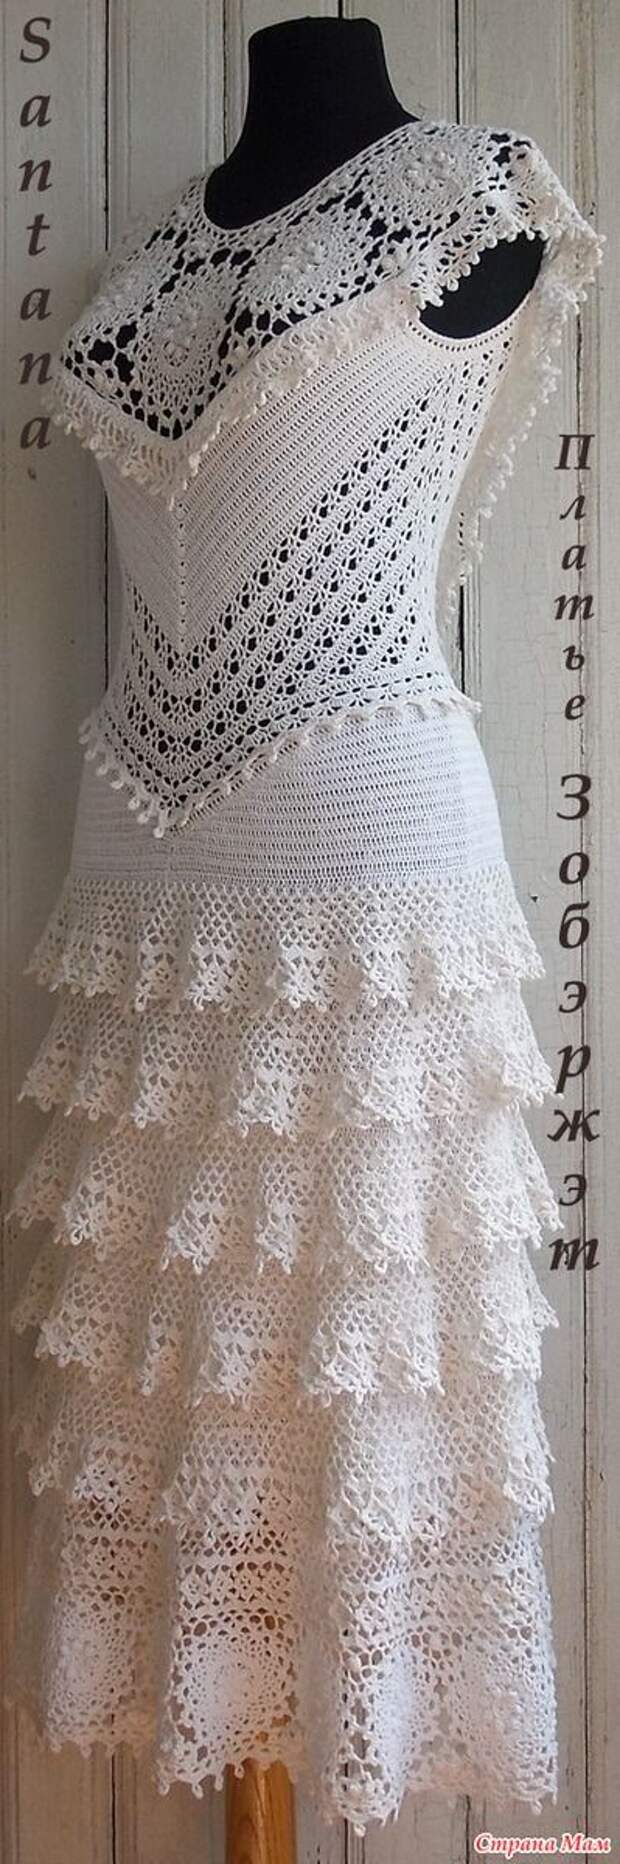 Crochet Dress...Awesome!: 